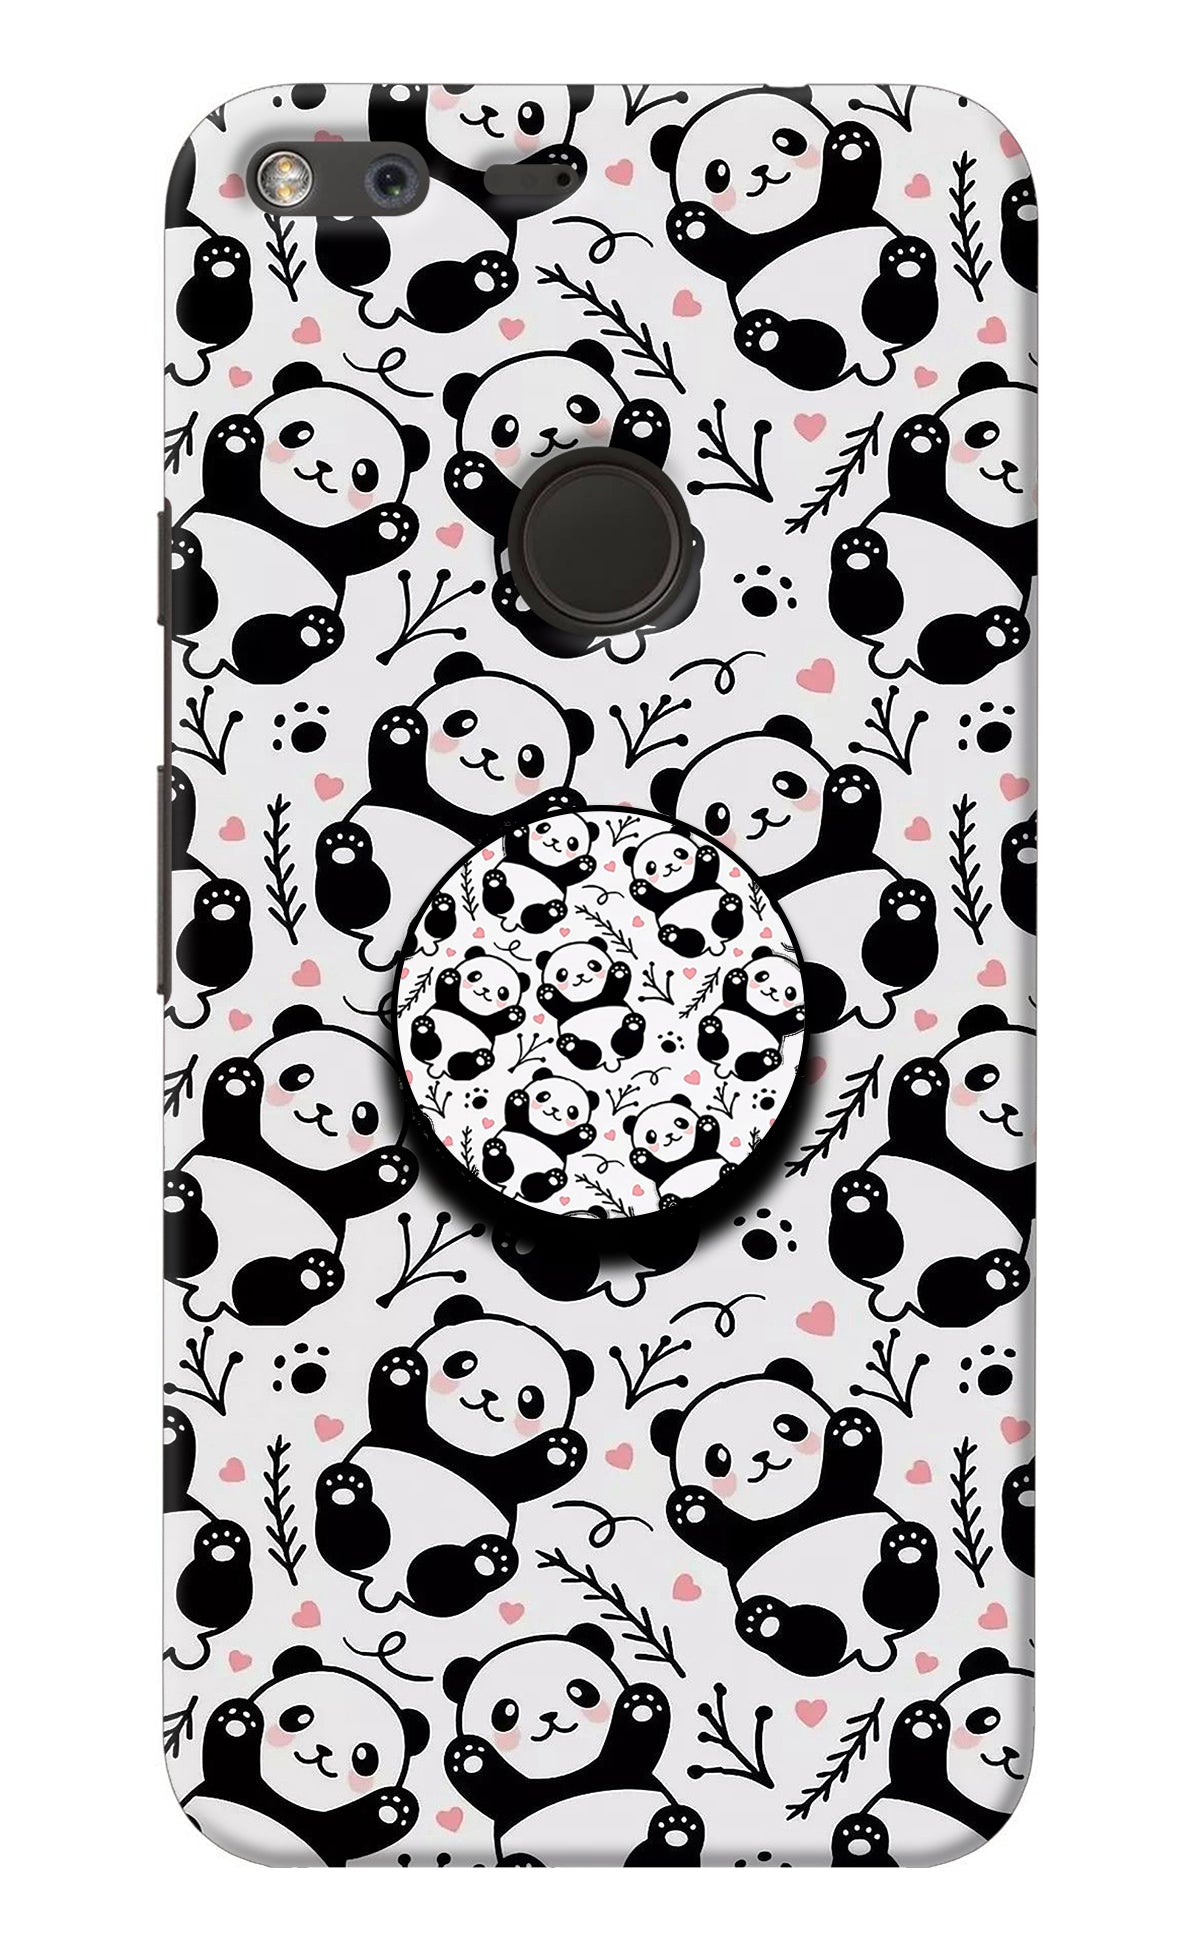 Cute Panda Google Pixel XL Pop Case